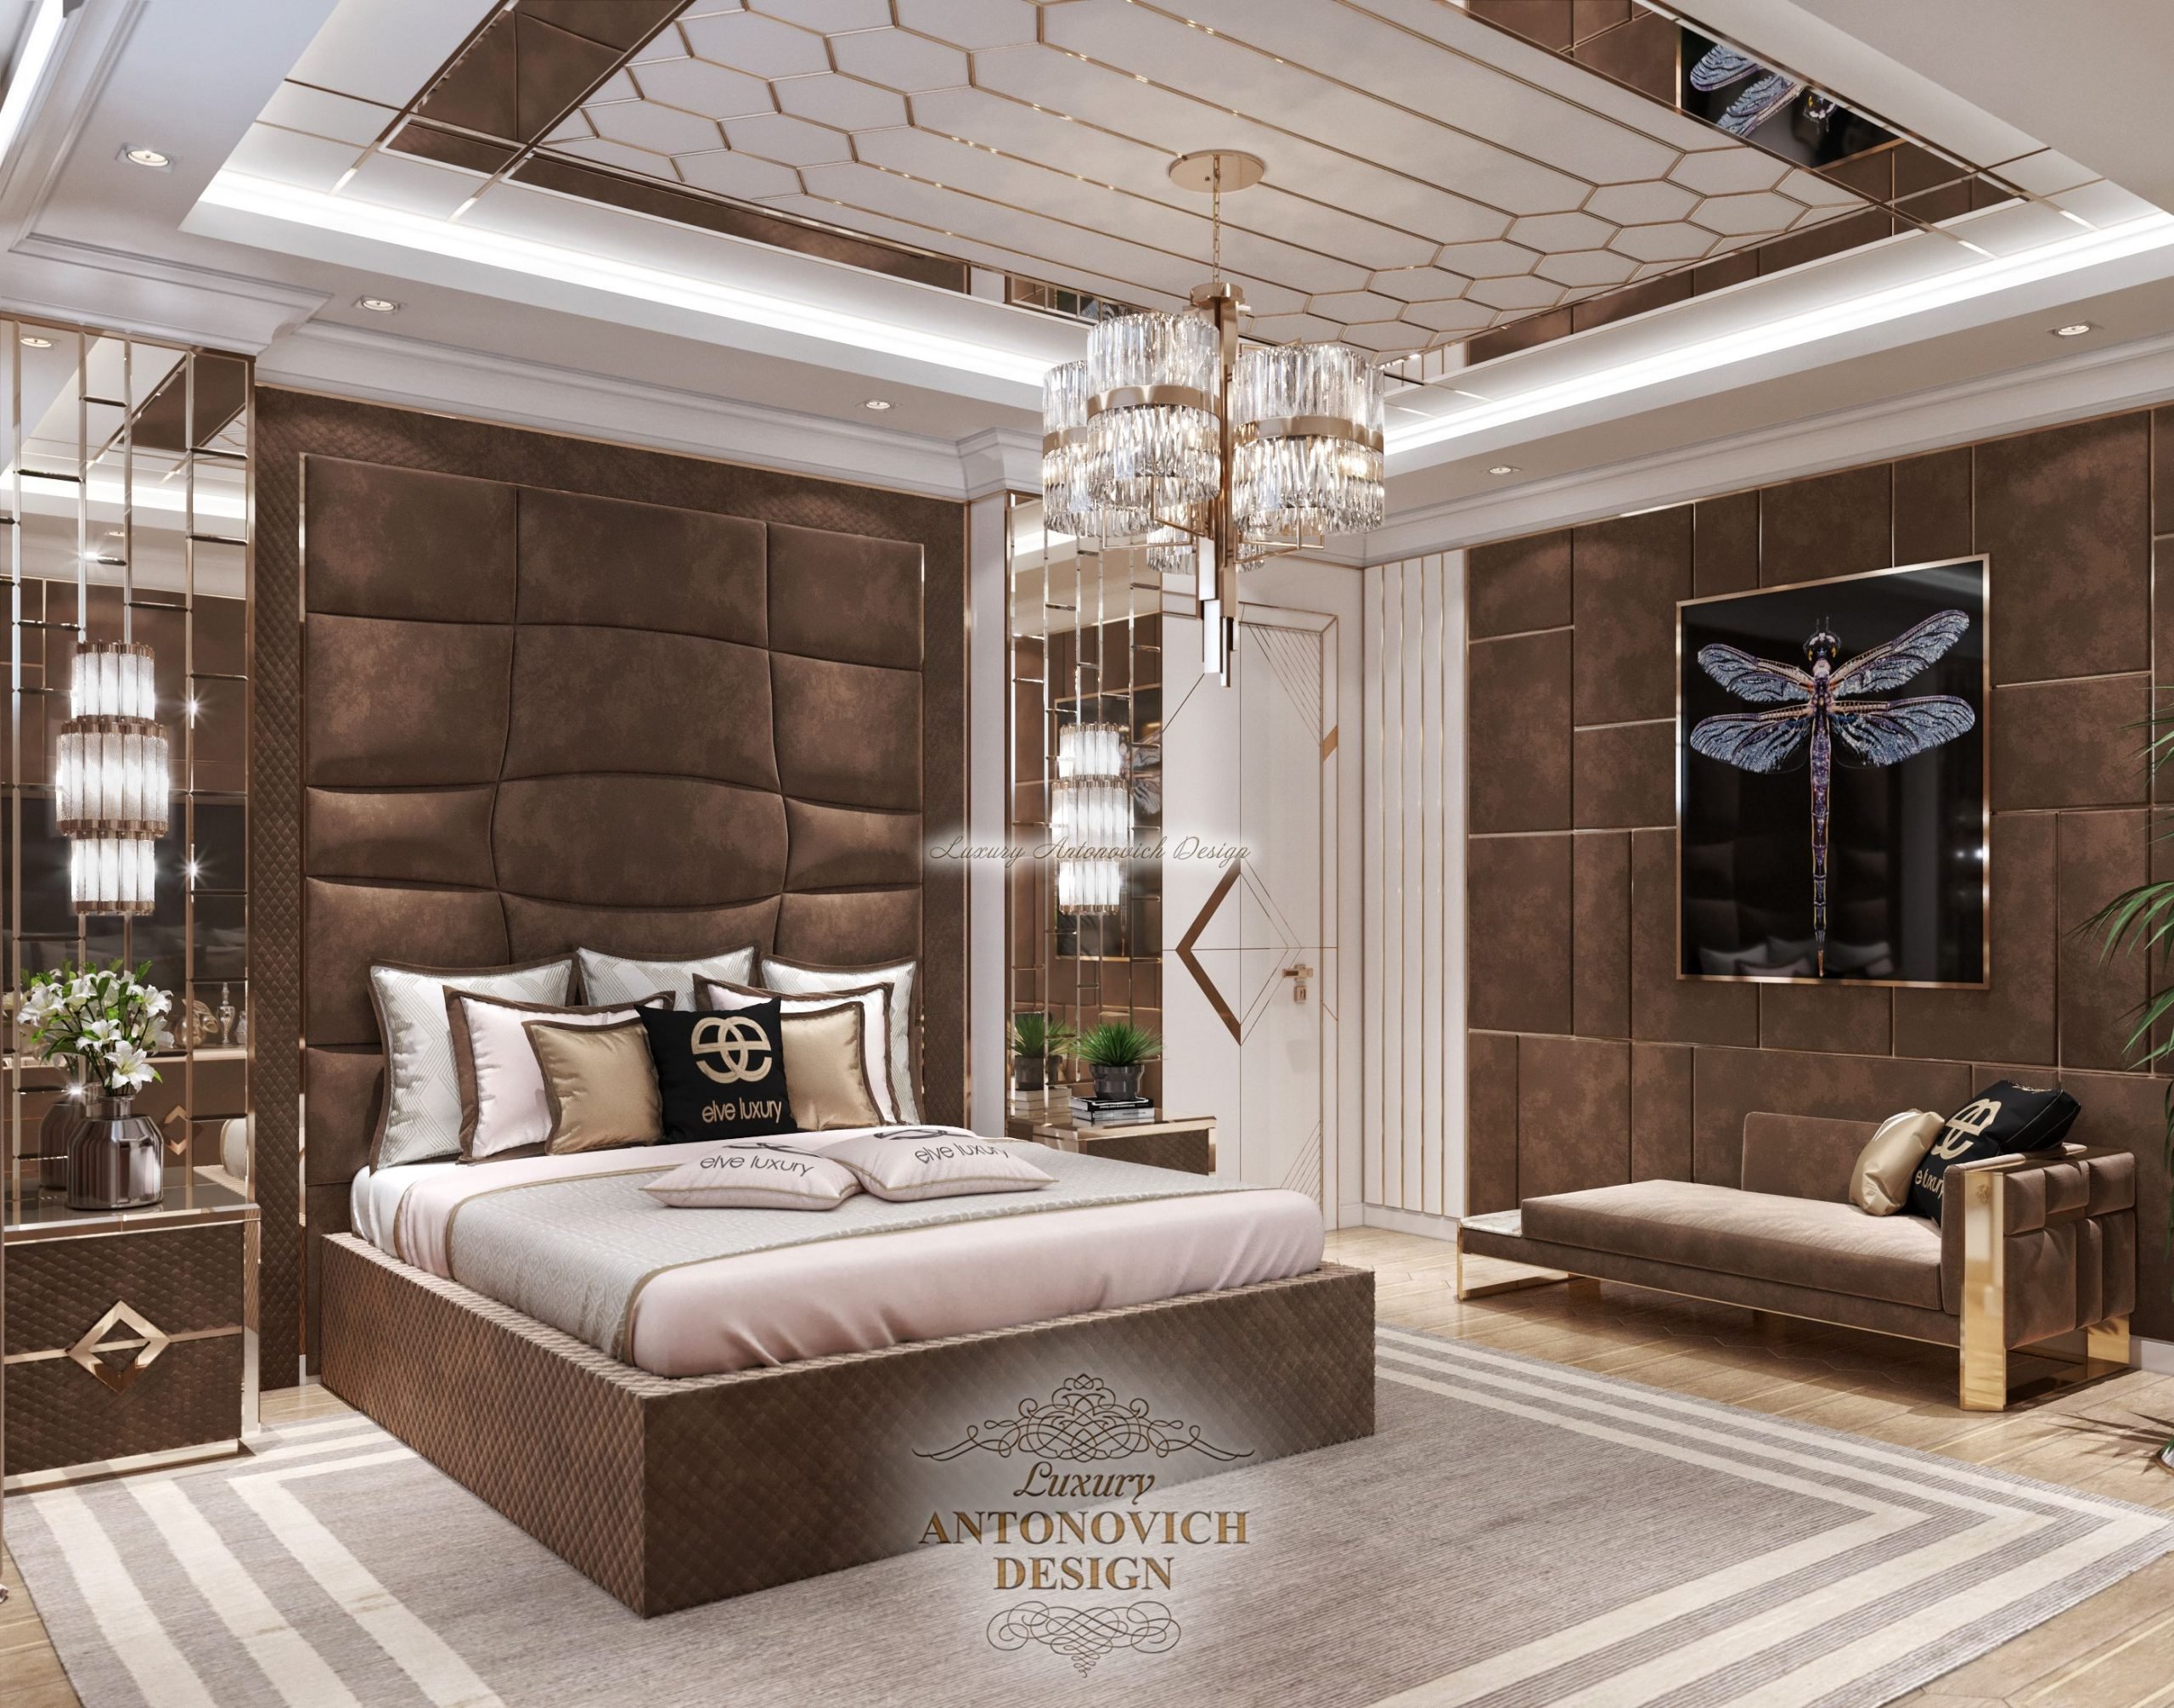 Luxury Antonovich Design.